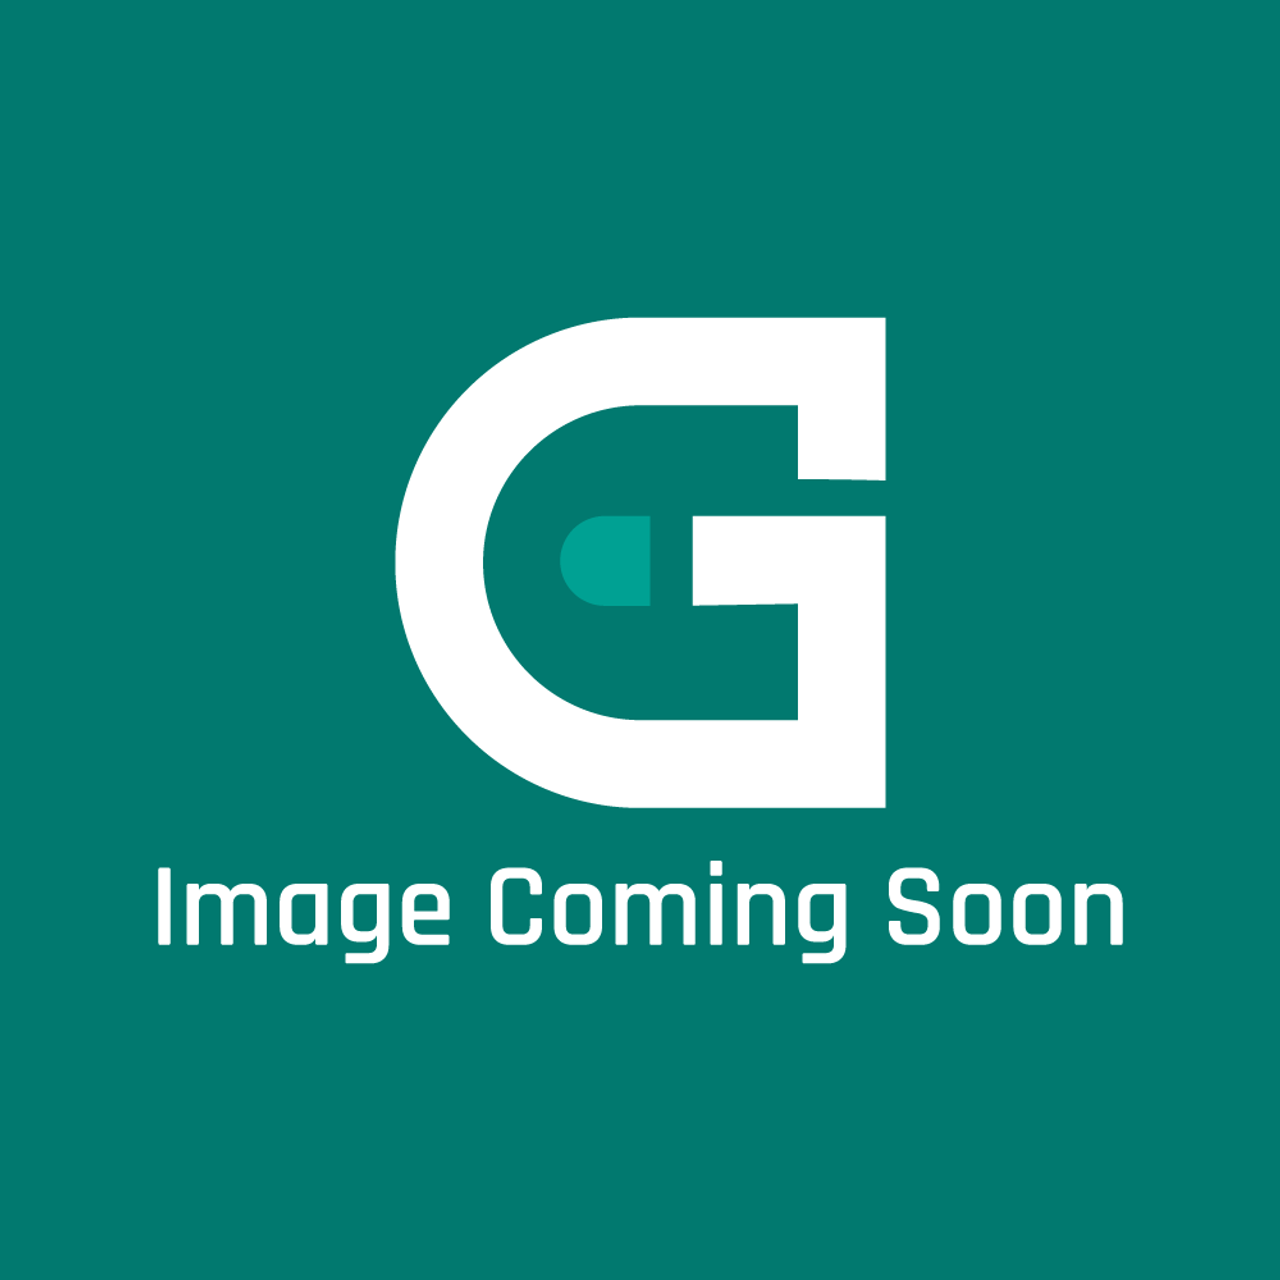 Groen Z012447 - Handwheel & Shaft Assy " D" - Image Coming Soon!